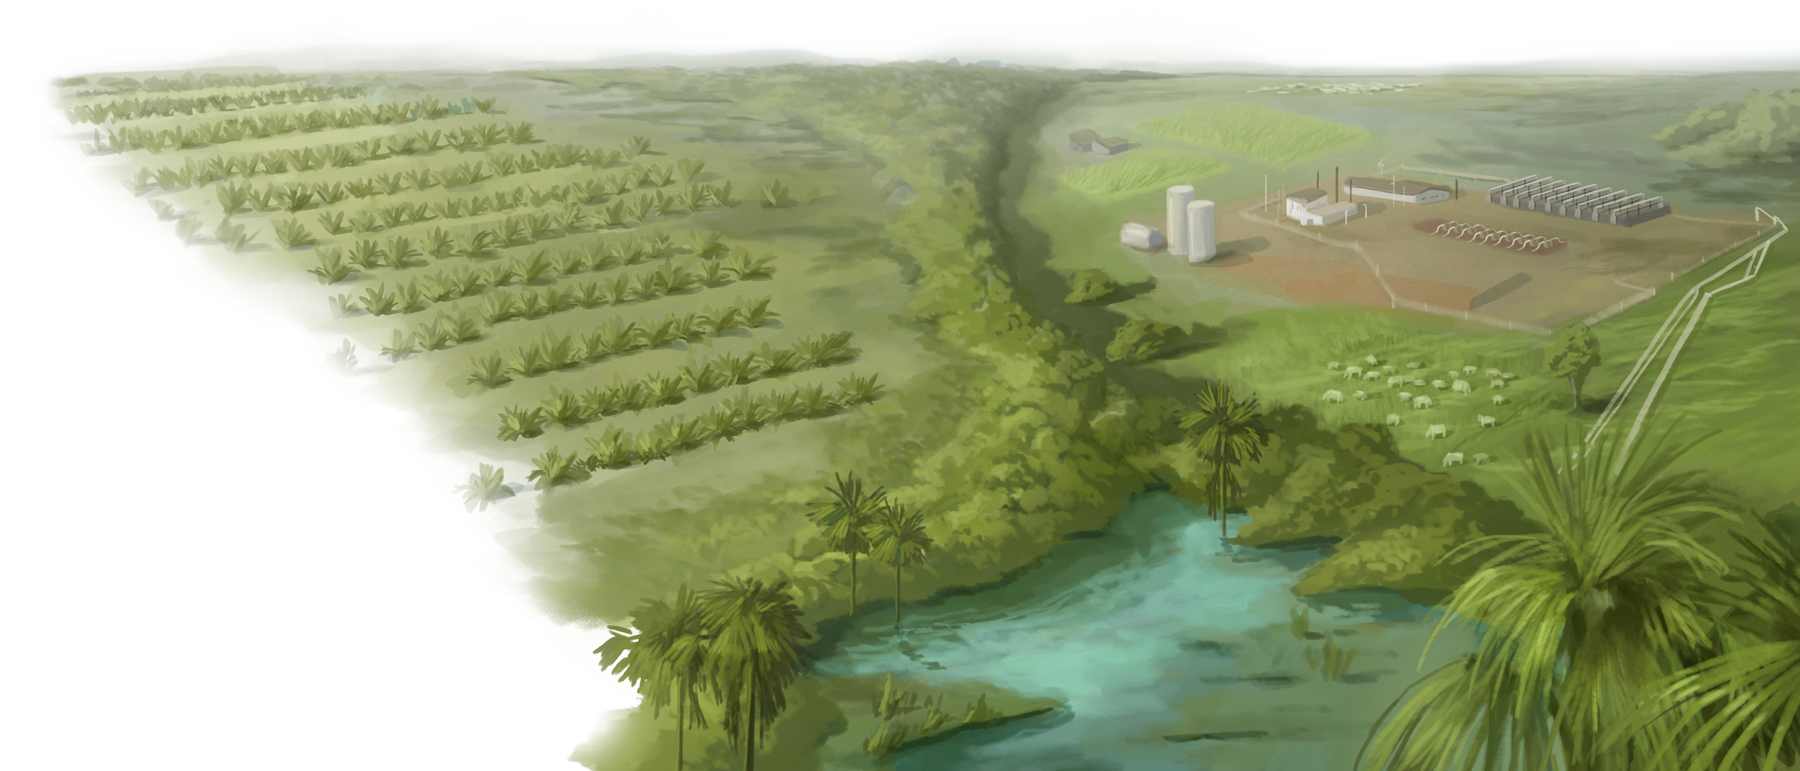 Frontera agropecuaria en la Orinoquia